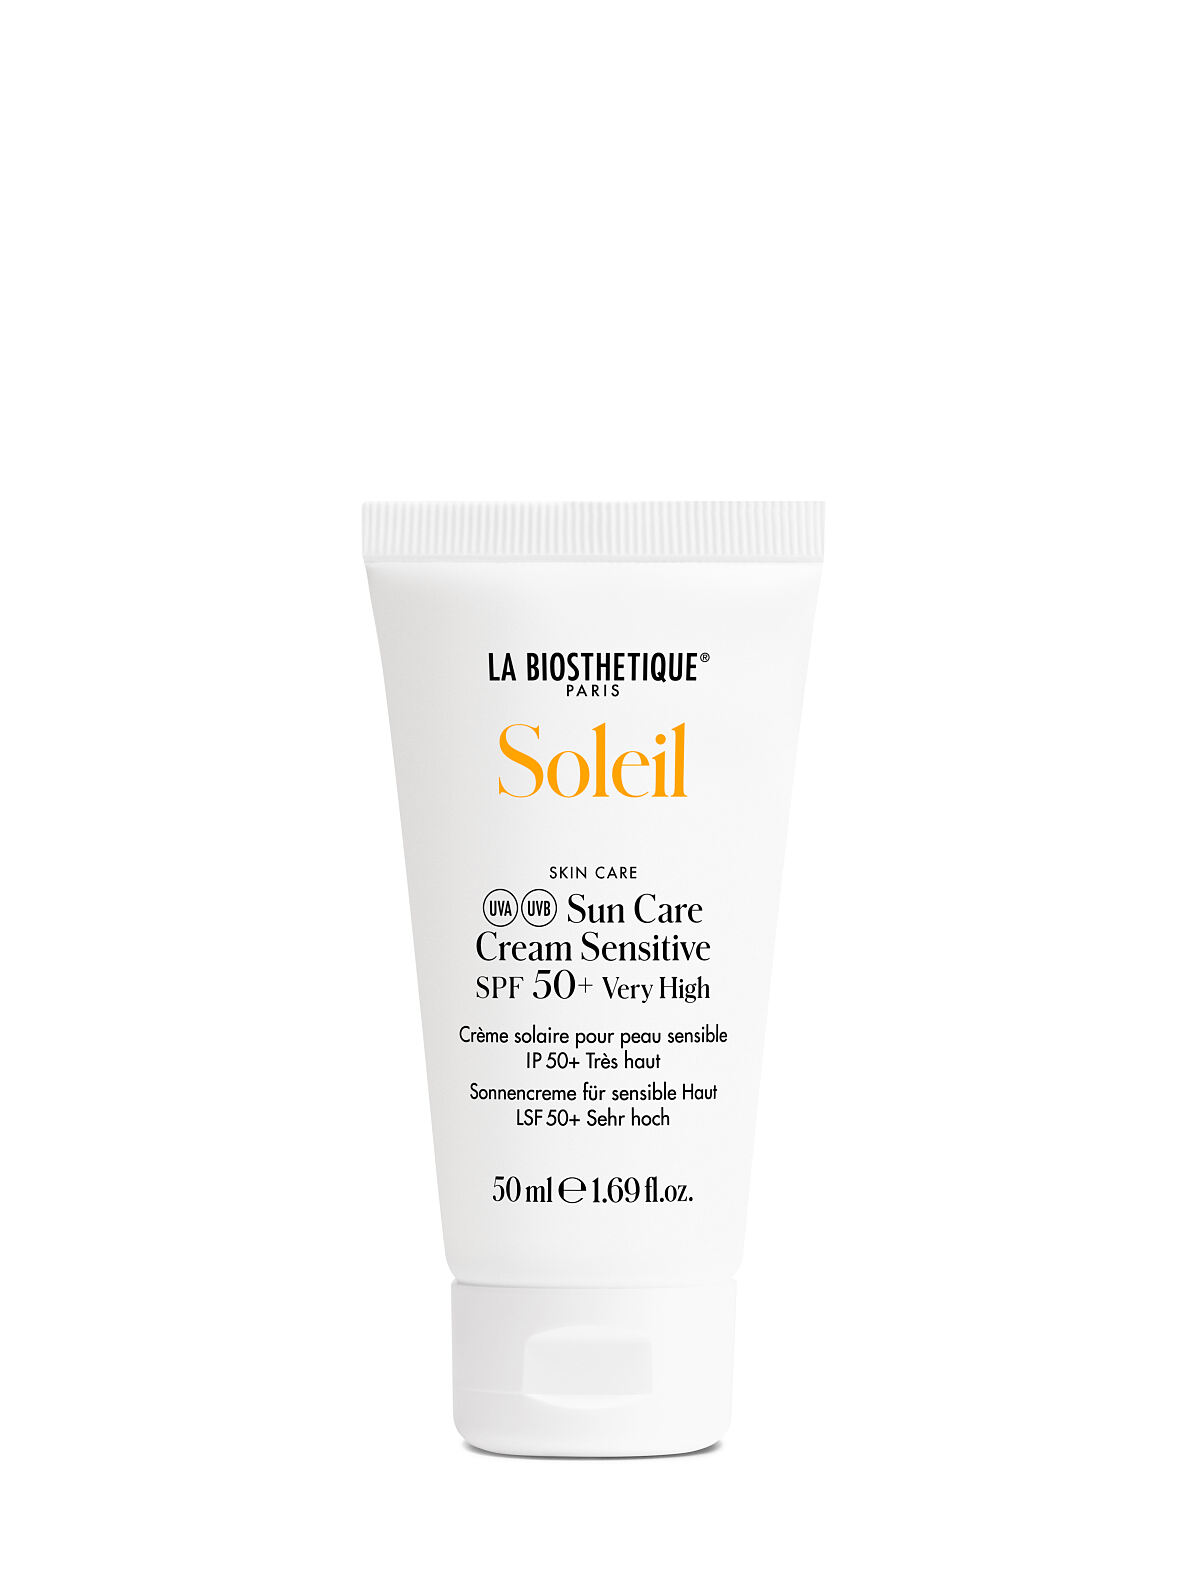 La Biosthétique_Skin-Soleil-002157-Sun-Care-Cream-Sensitive-SPF50-50ml-EUR 24,50